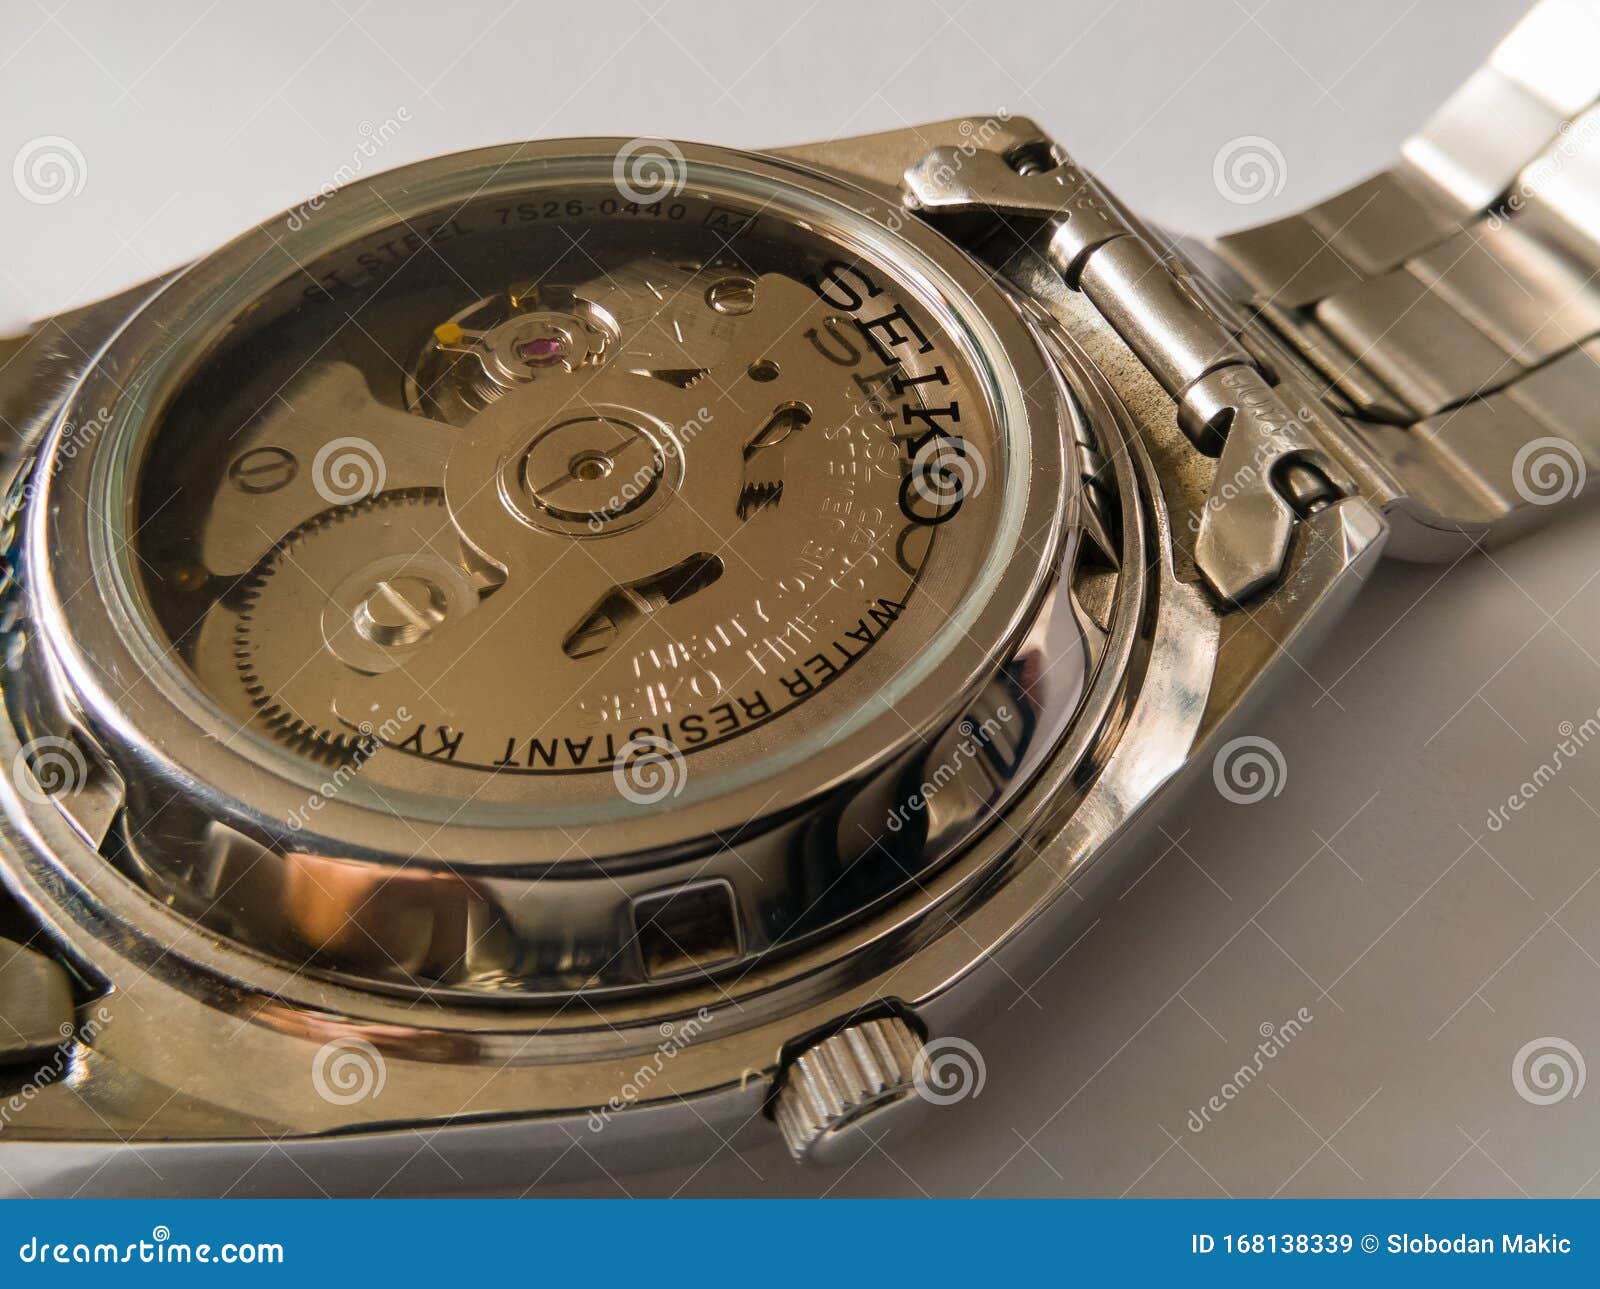 Seiko 5 automatic watch